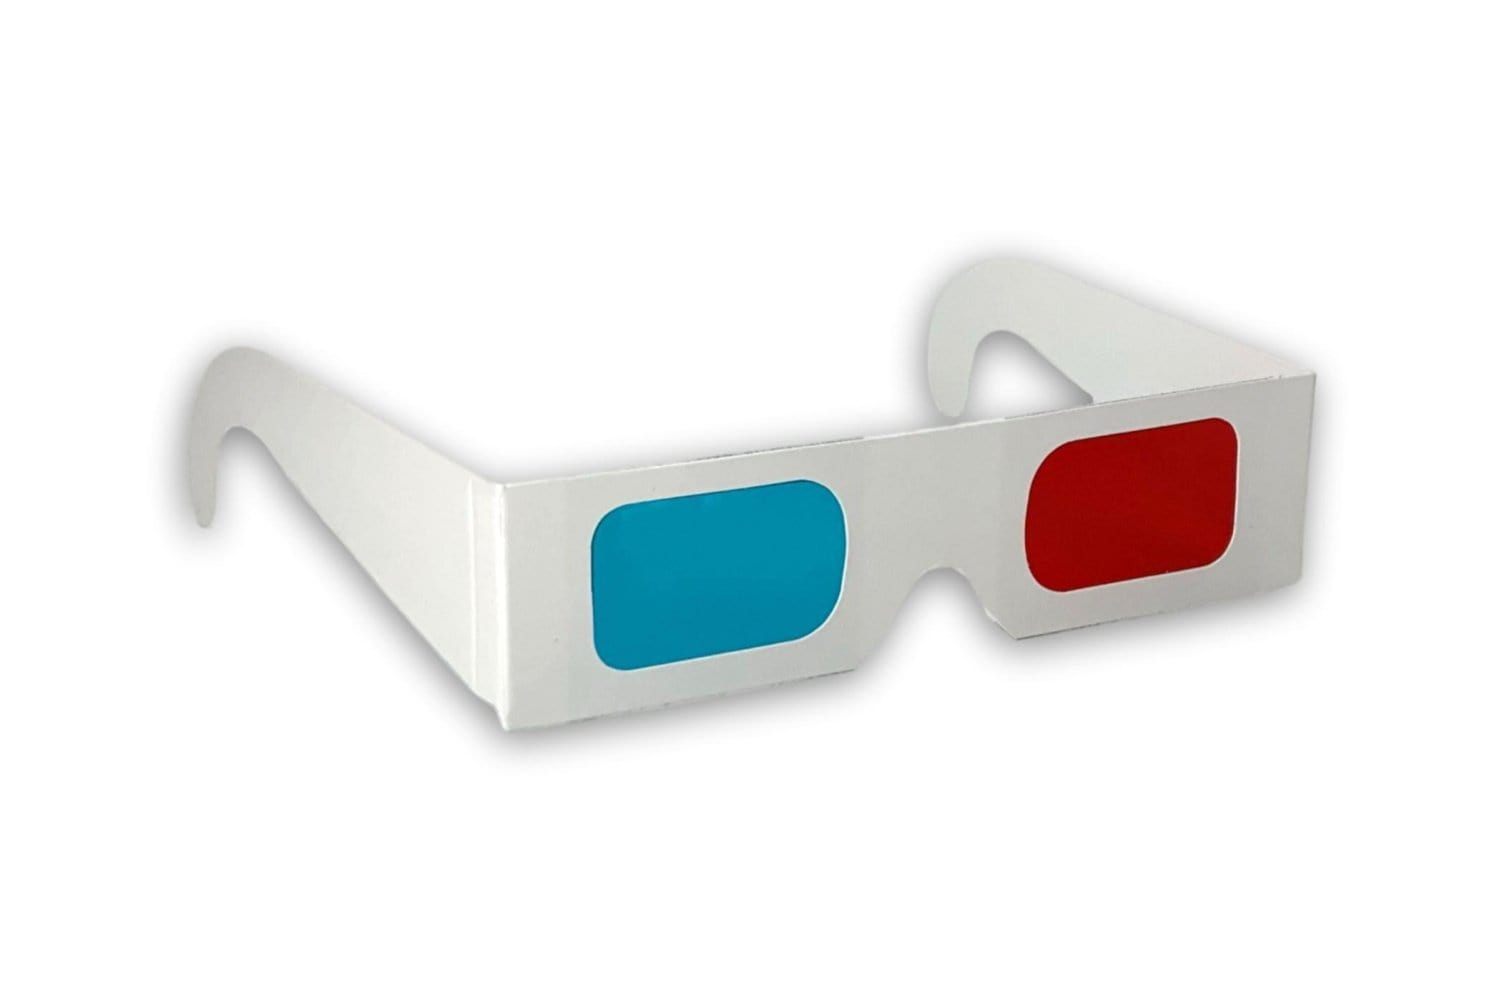 3D Glasses, Red/Cyan Lenses